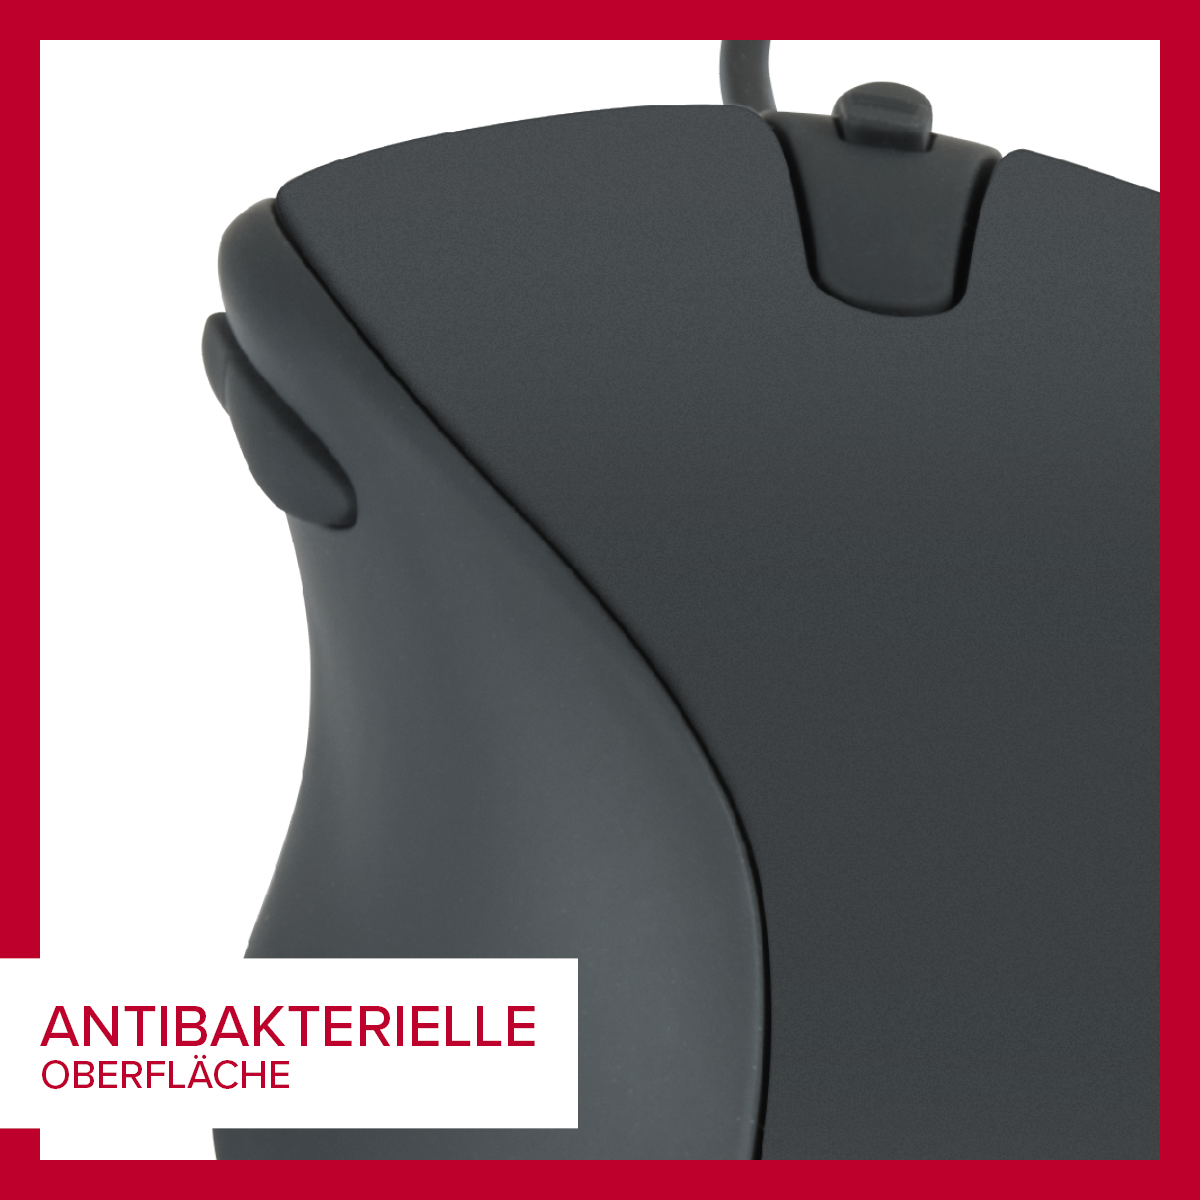 AXON Leise & Antibakteriell Maus - USB, rubber-schwarz